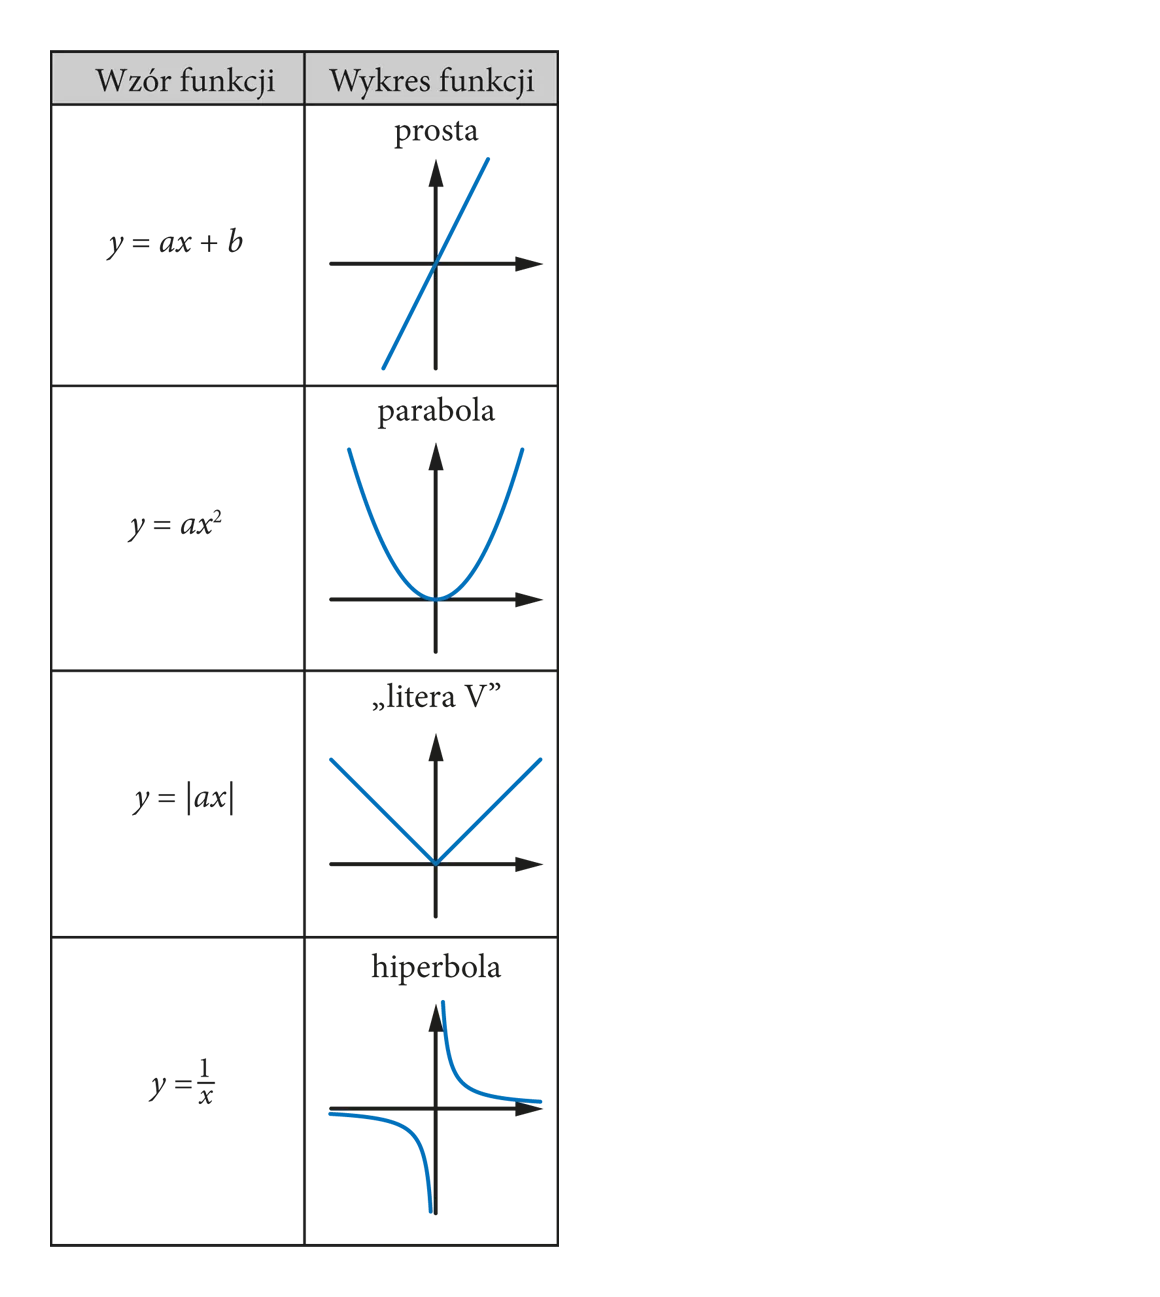 W tabeli wzory funkcji i charakterystyczne dla nich kształty wykresów: prosta, parabola,  „litera V”, hiperbola.